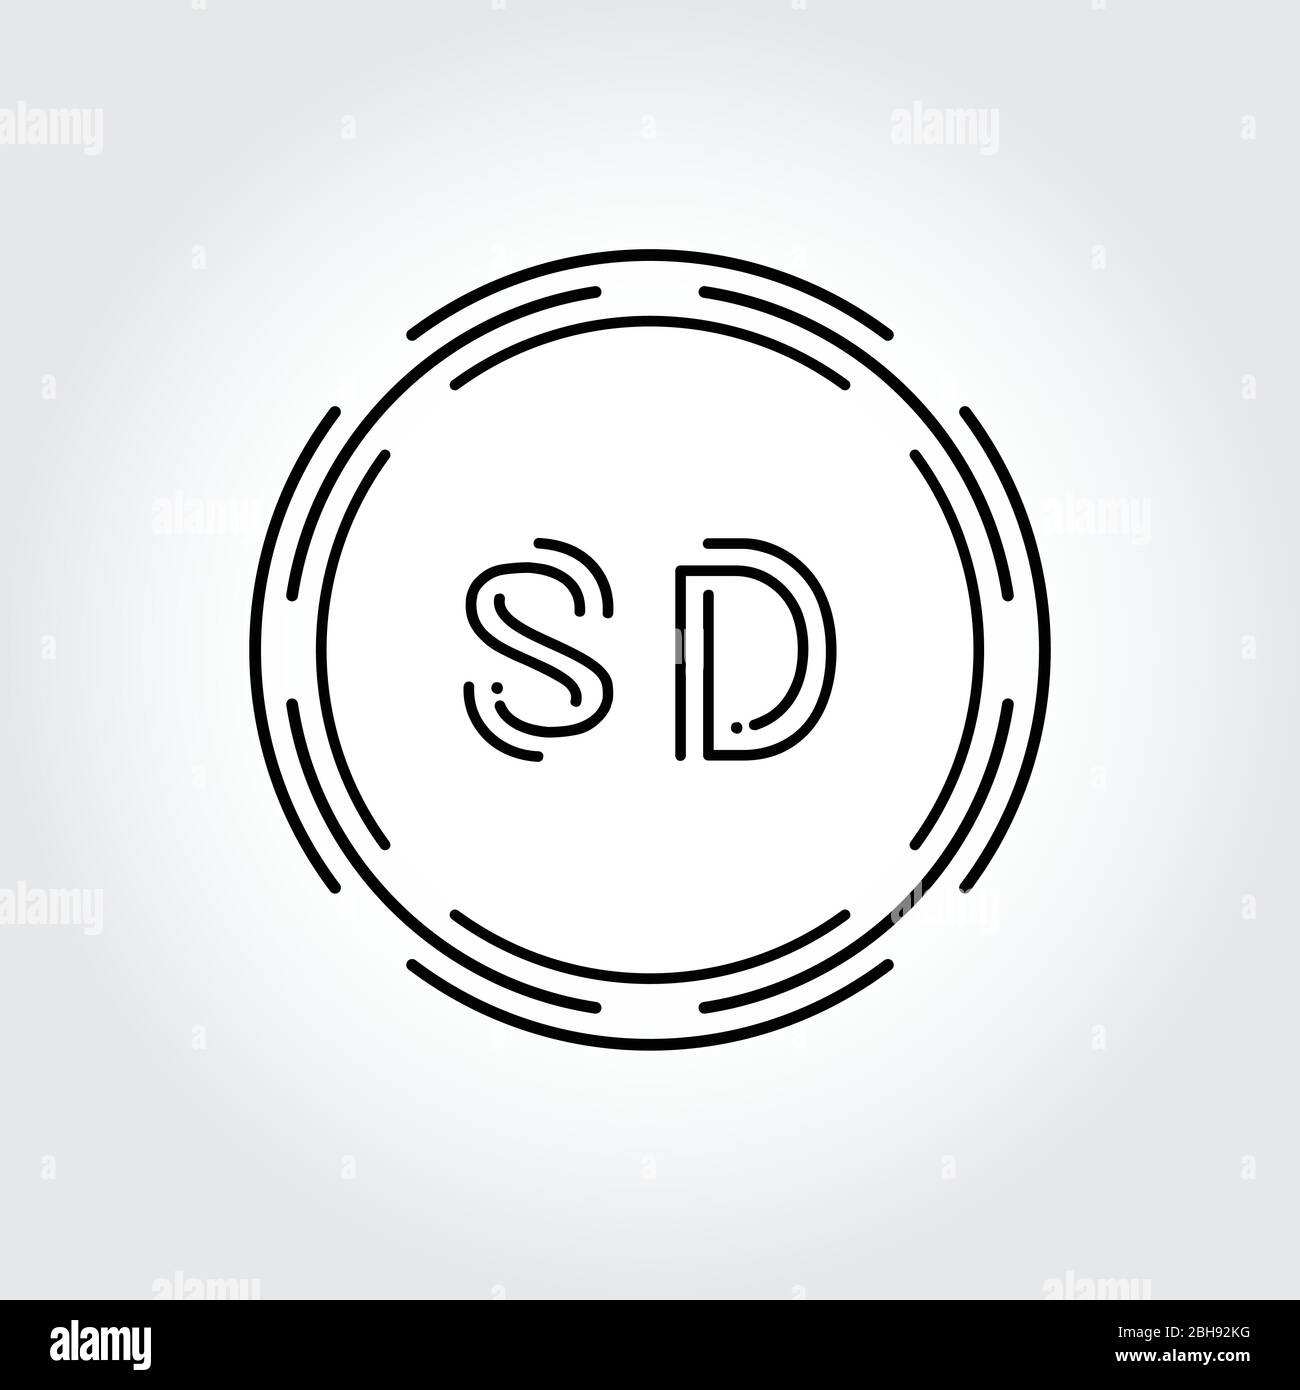 Initial SD Logo Design Creative Typography Vector Template. Digital Abstract Letter SD Logo Vector Illustration Stock Vector